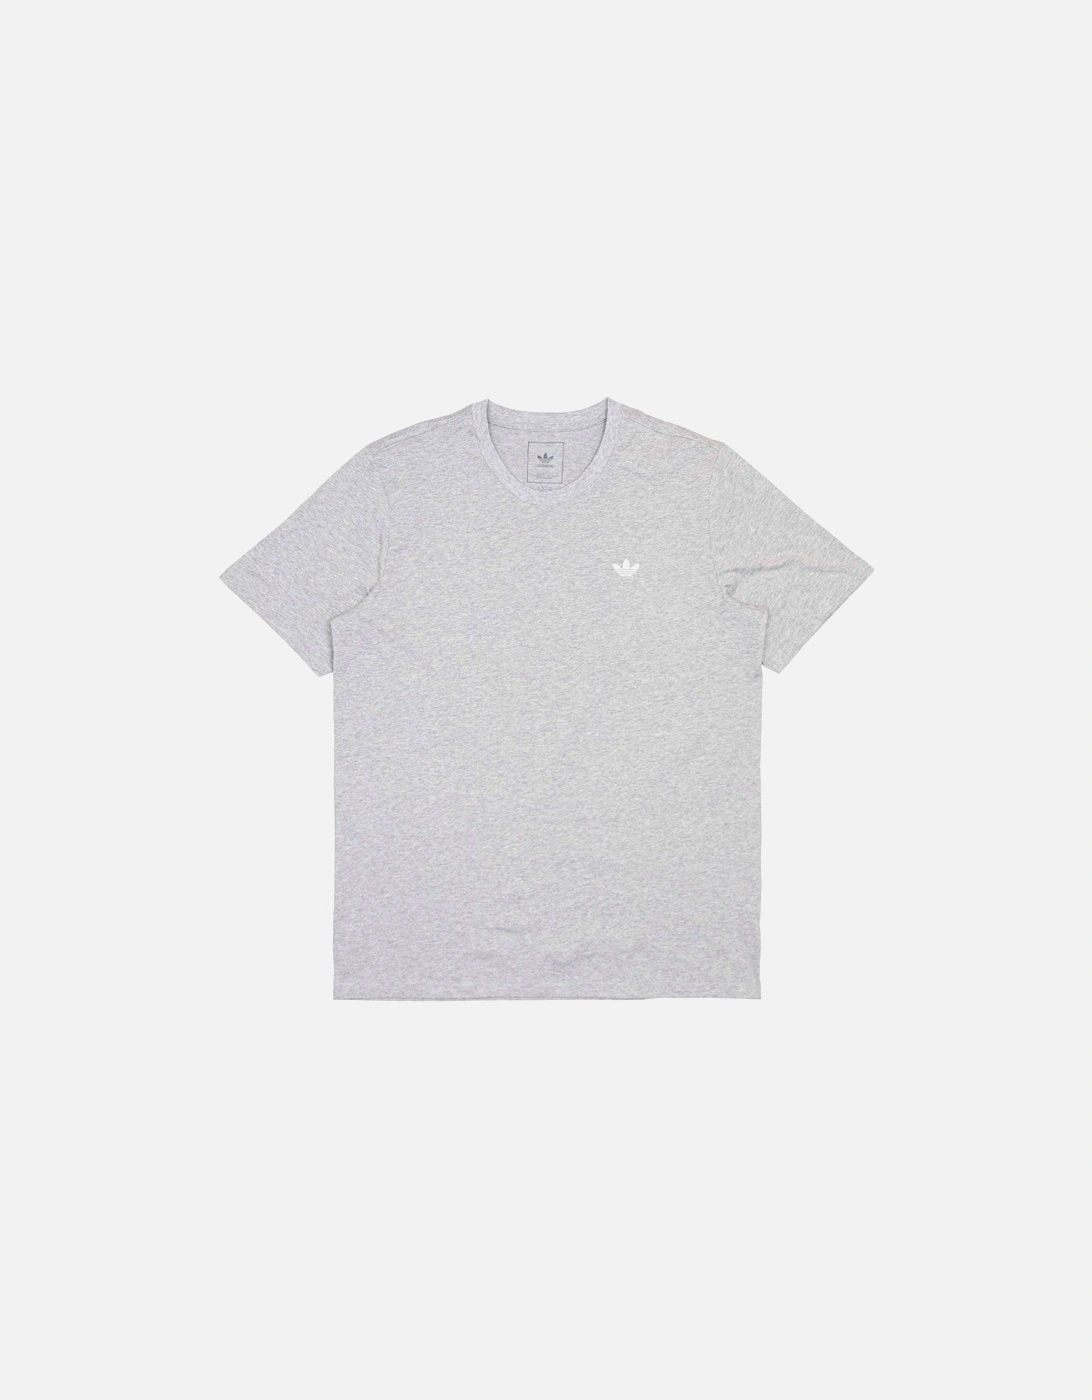 4.0 Logo T-Shirt - Medium Heather Grey/White